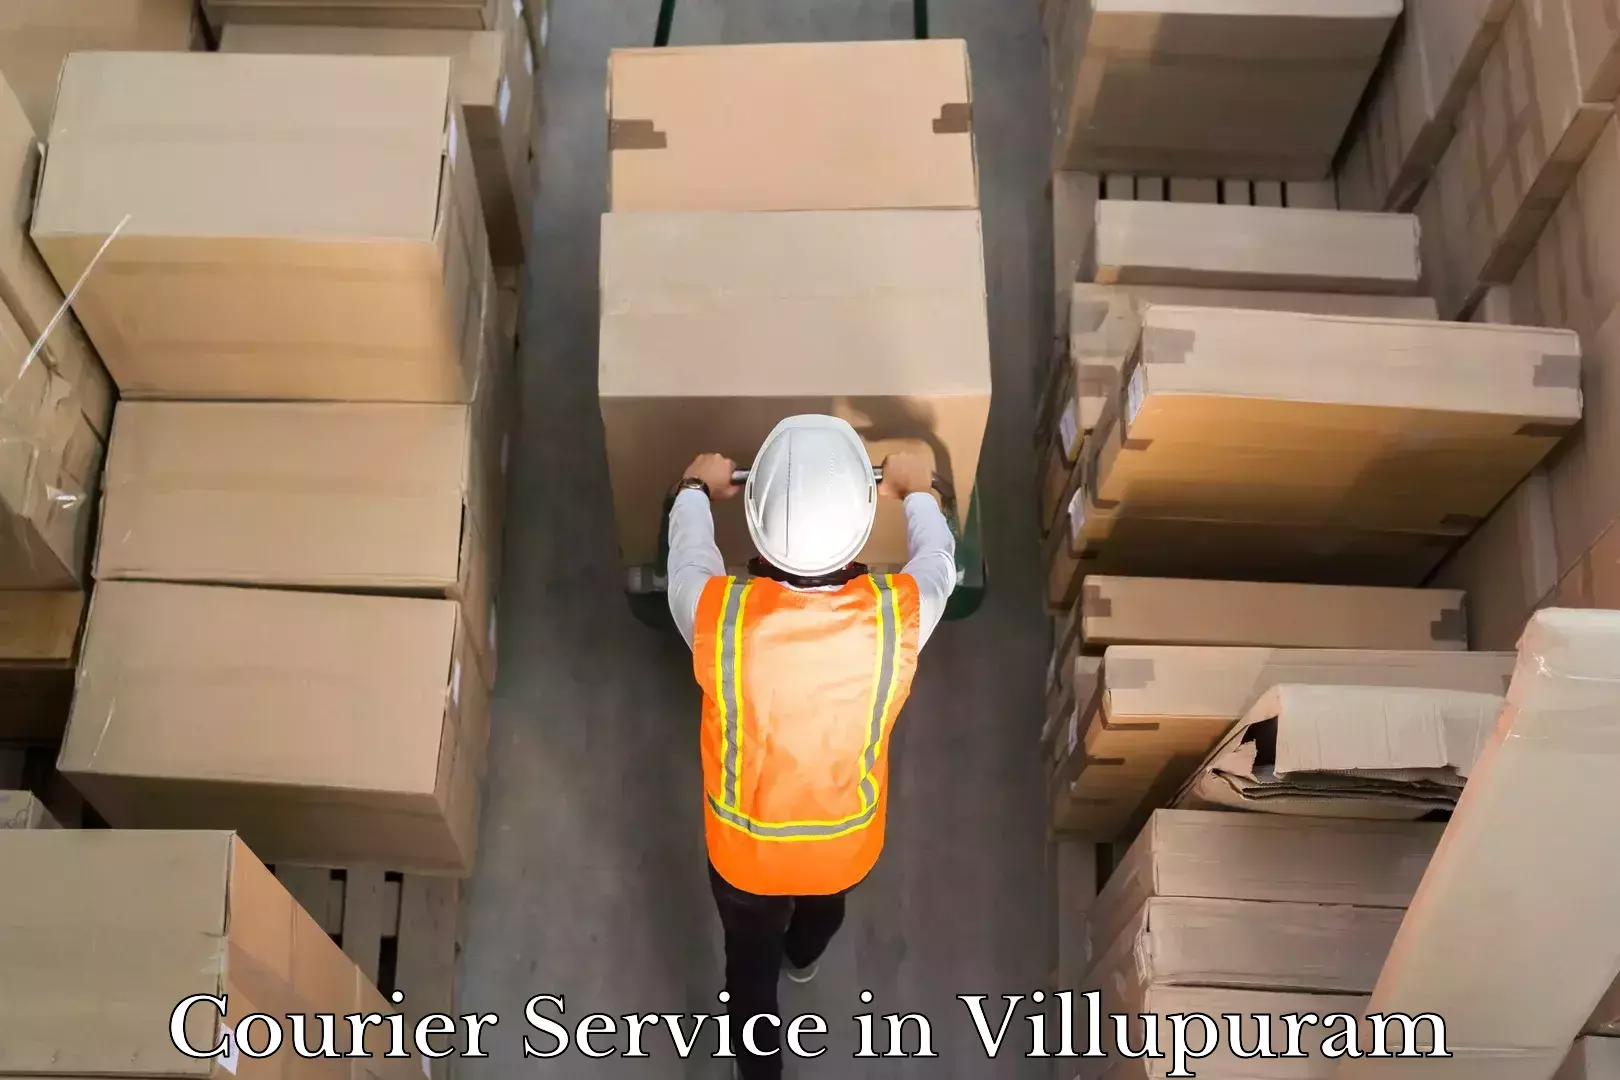 24-hour courier service in Villupuram